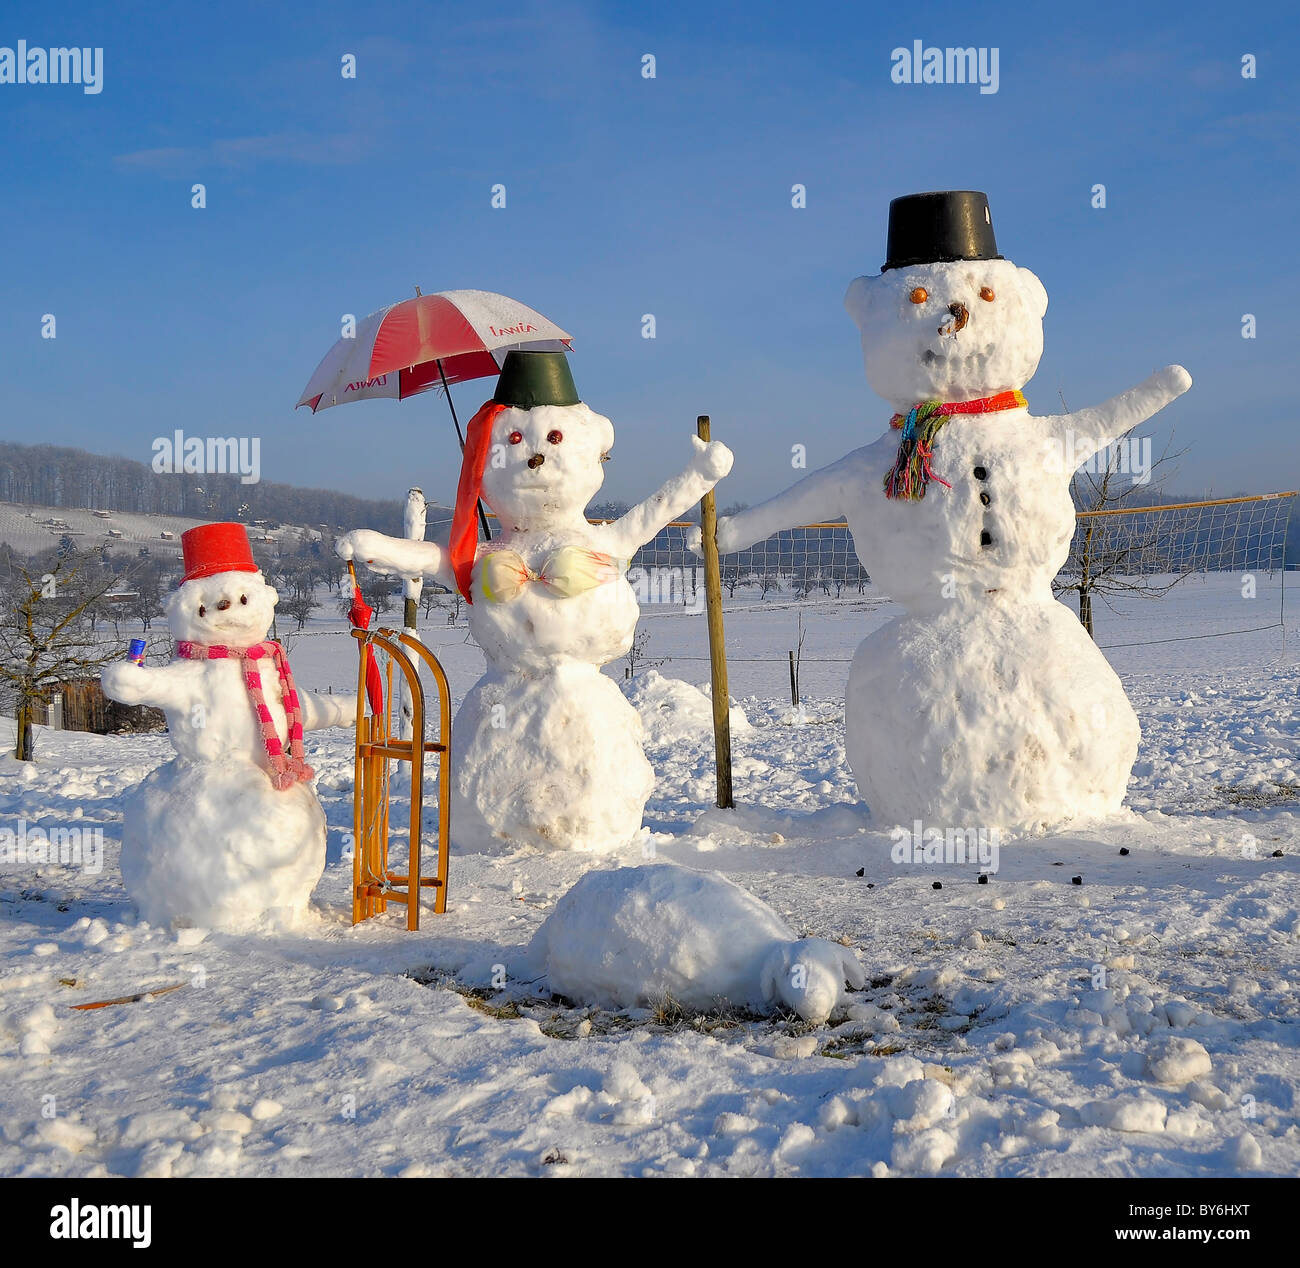 Snowman Family with animal figures, winter landscape, snowman family, Schneemannfamilie mit Tierfiguren, Winterlandschaft, Stock Photo